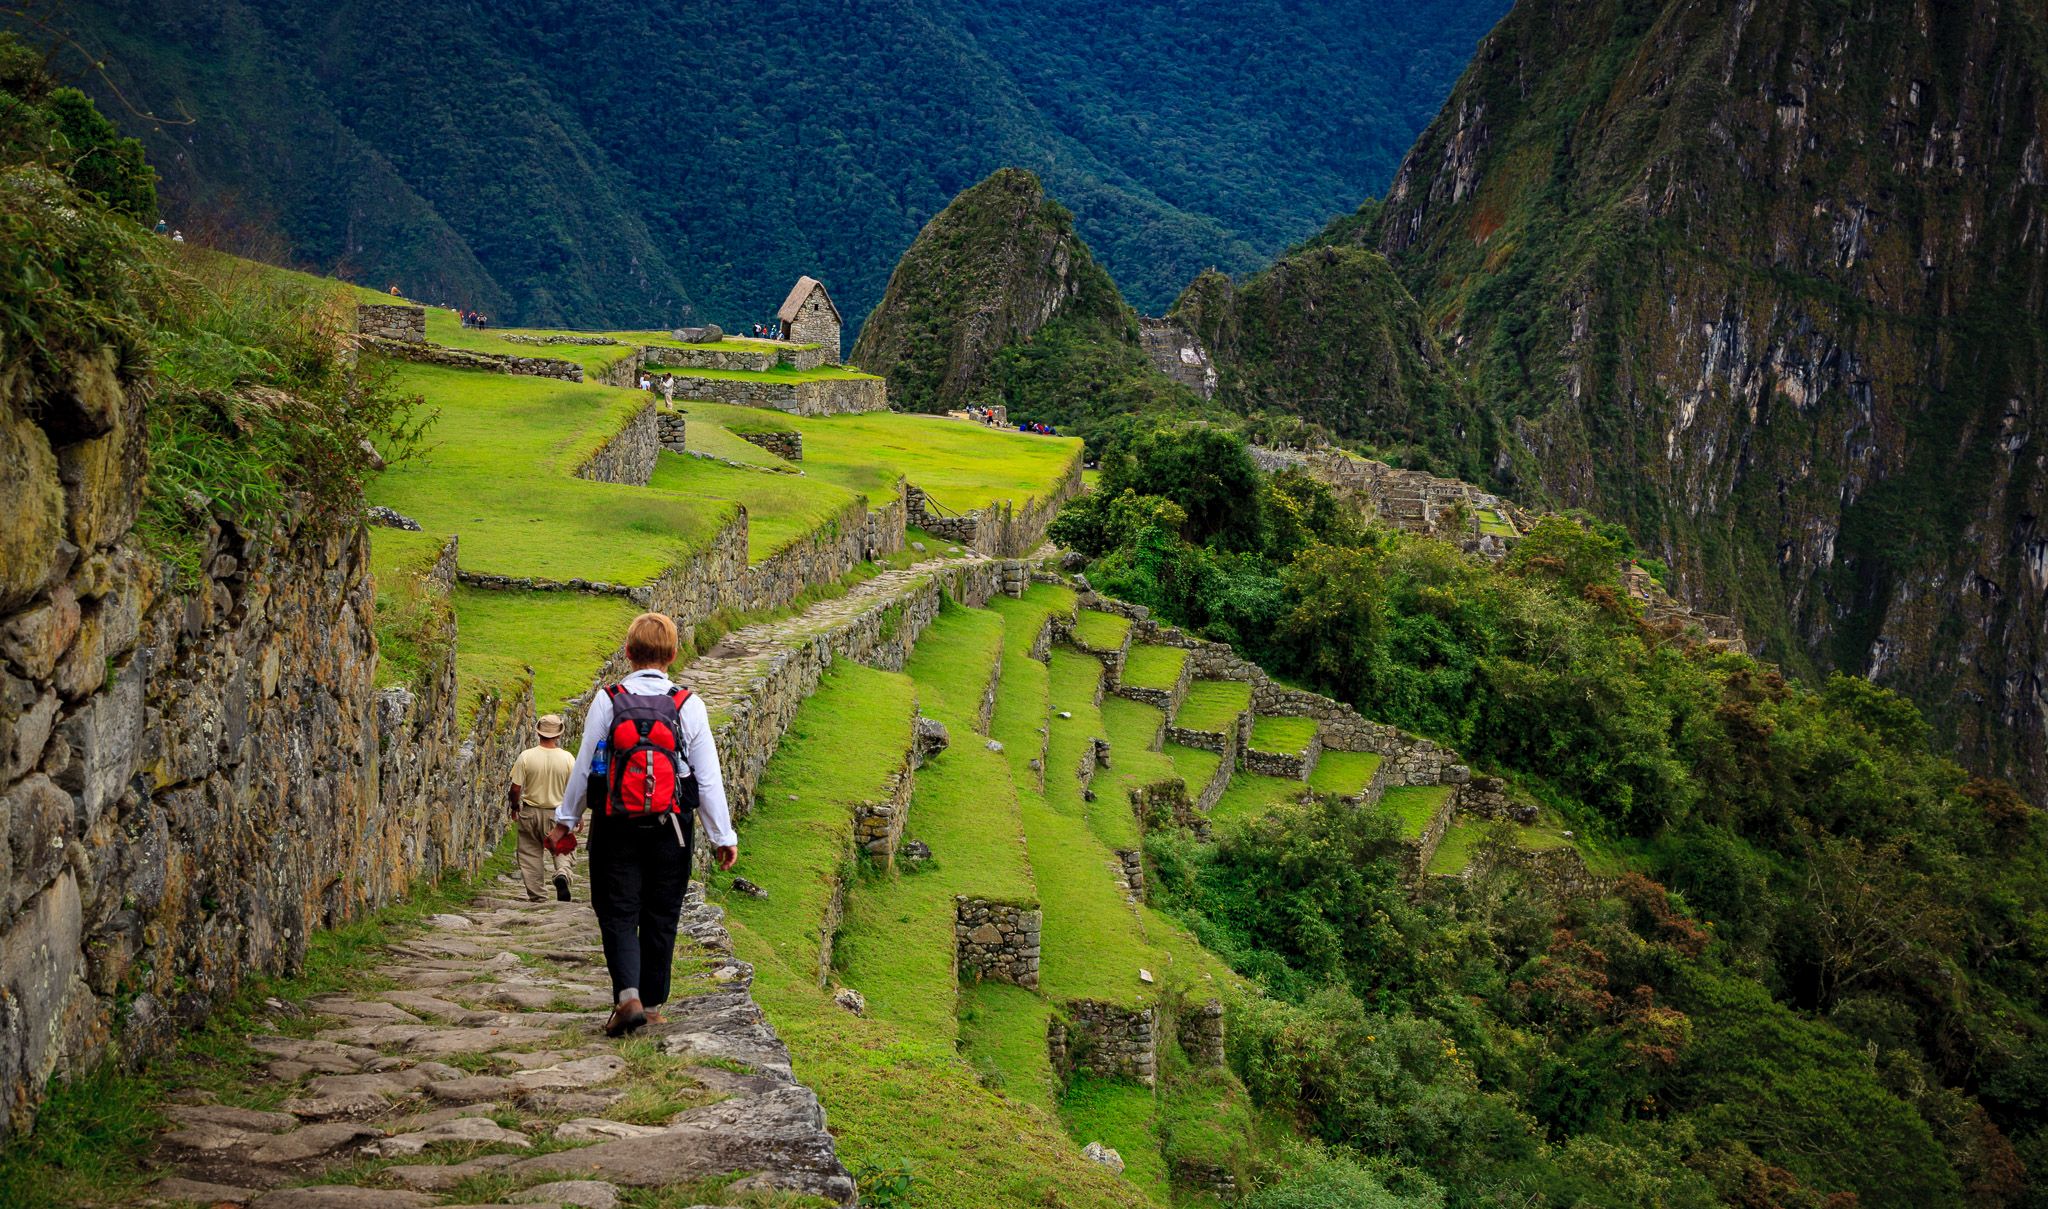 Entering Machu Picchu on Inca Trail from the Sun Gate